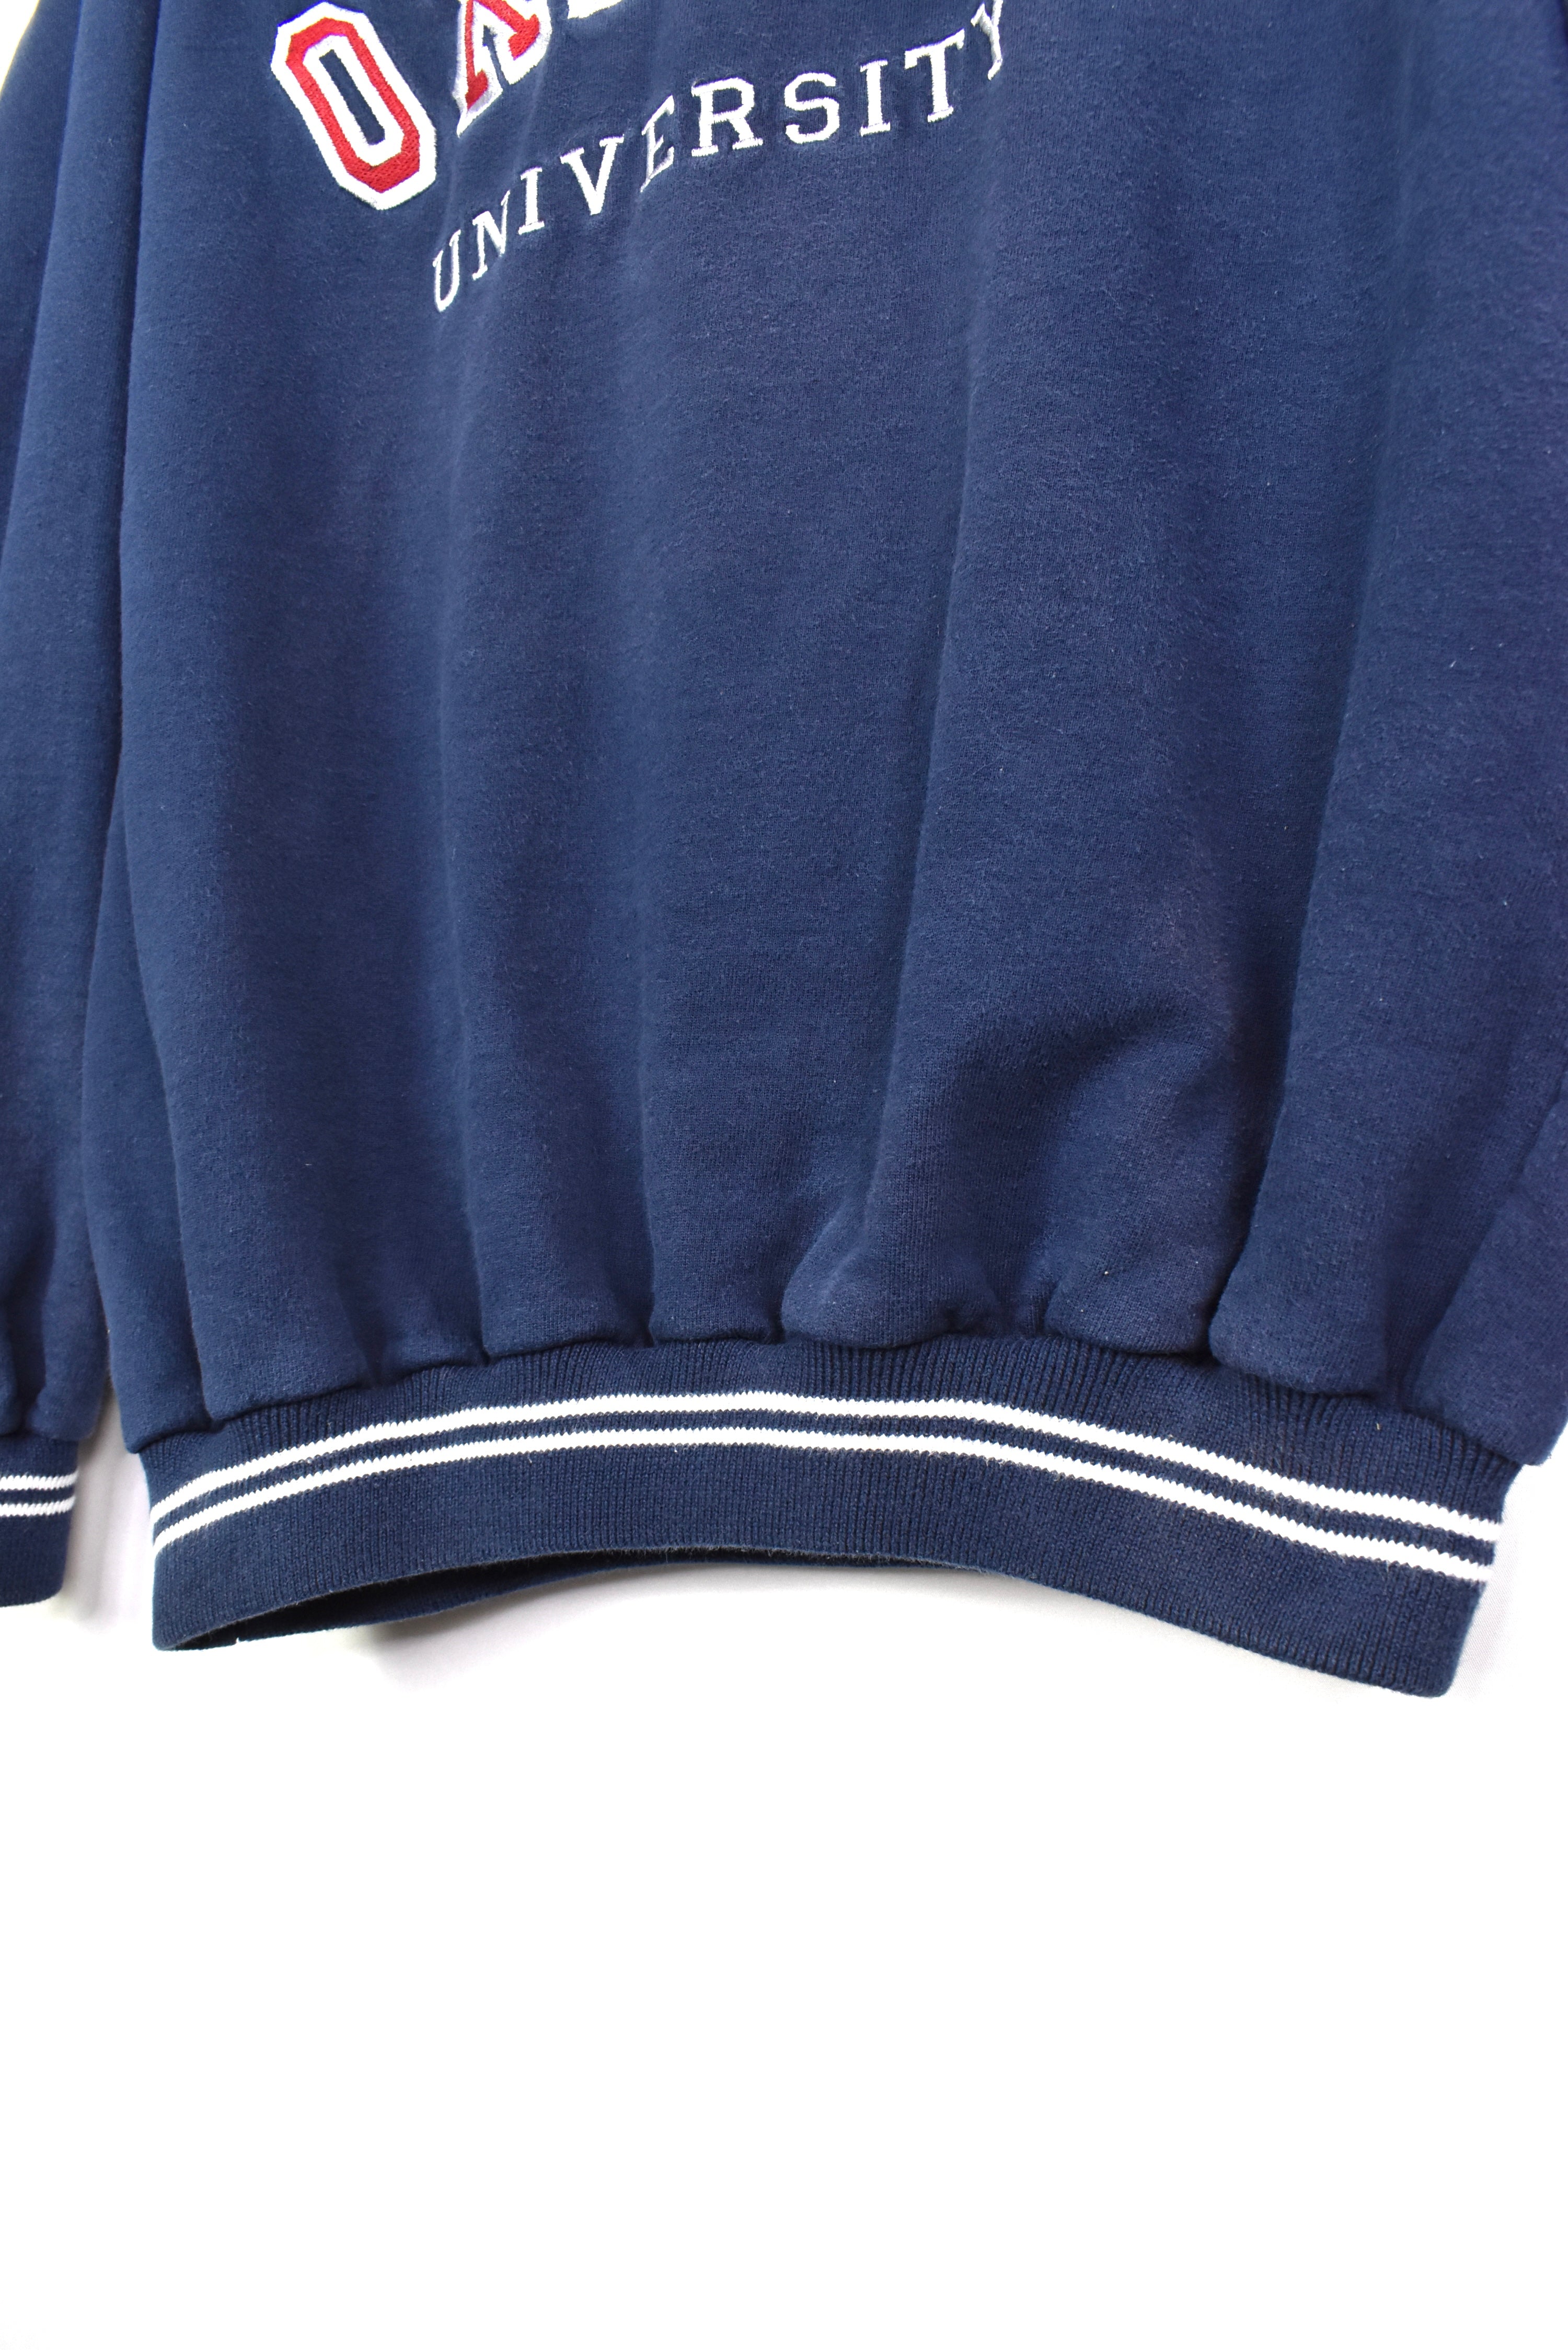 Vintage University of Oxford sweatshirt, college embroidered crewneck - XL, navy blue COLLEGE